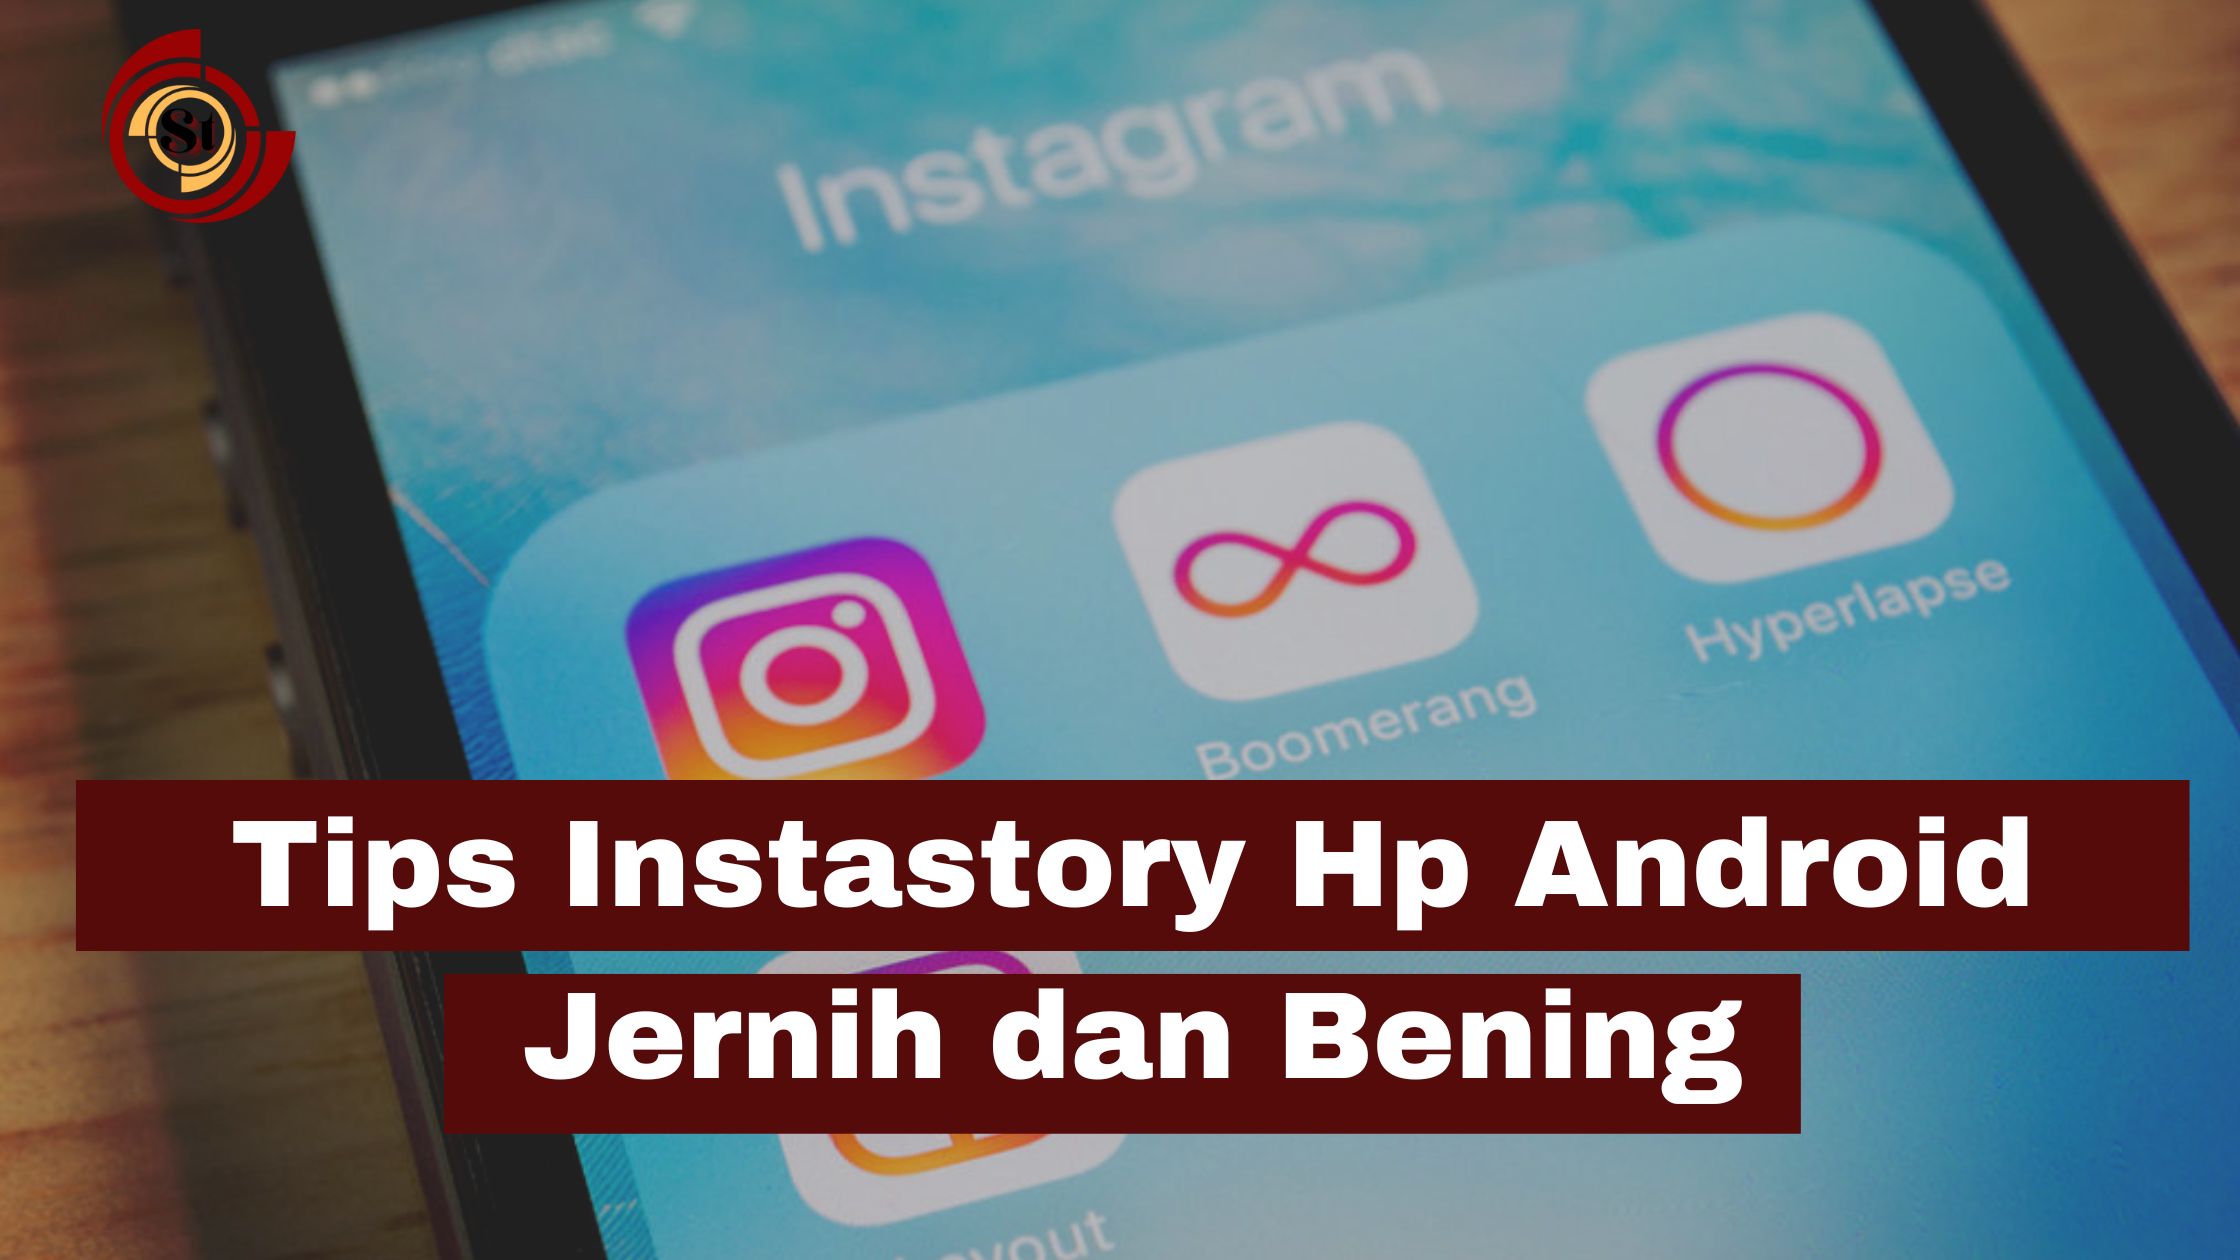 Tips Instastory Hp Android Jernih dan Bening